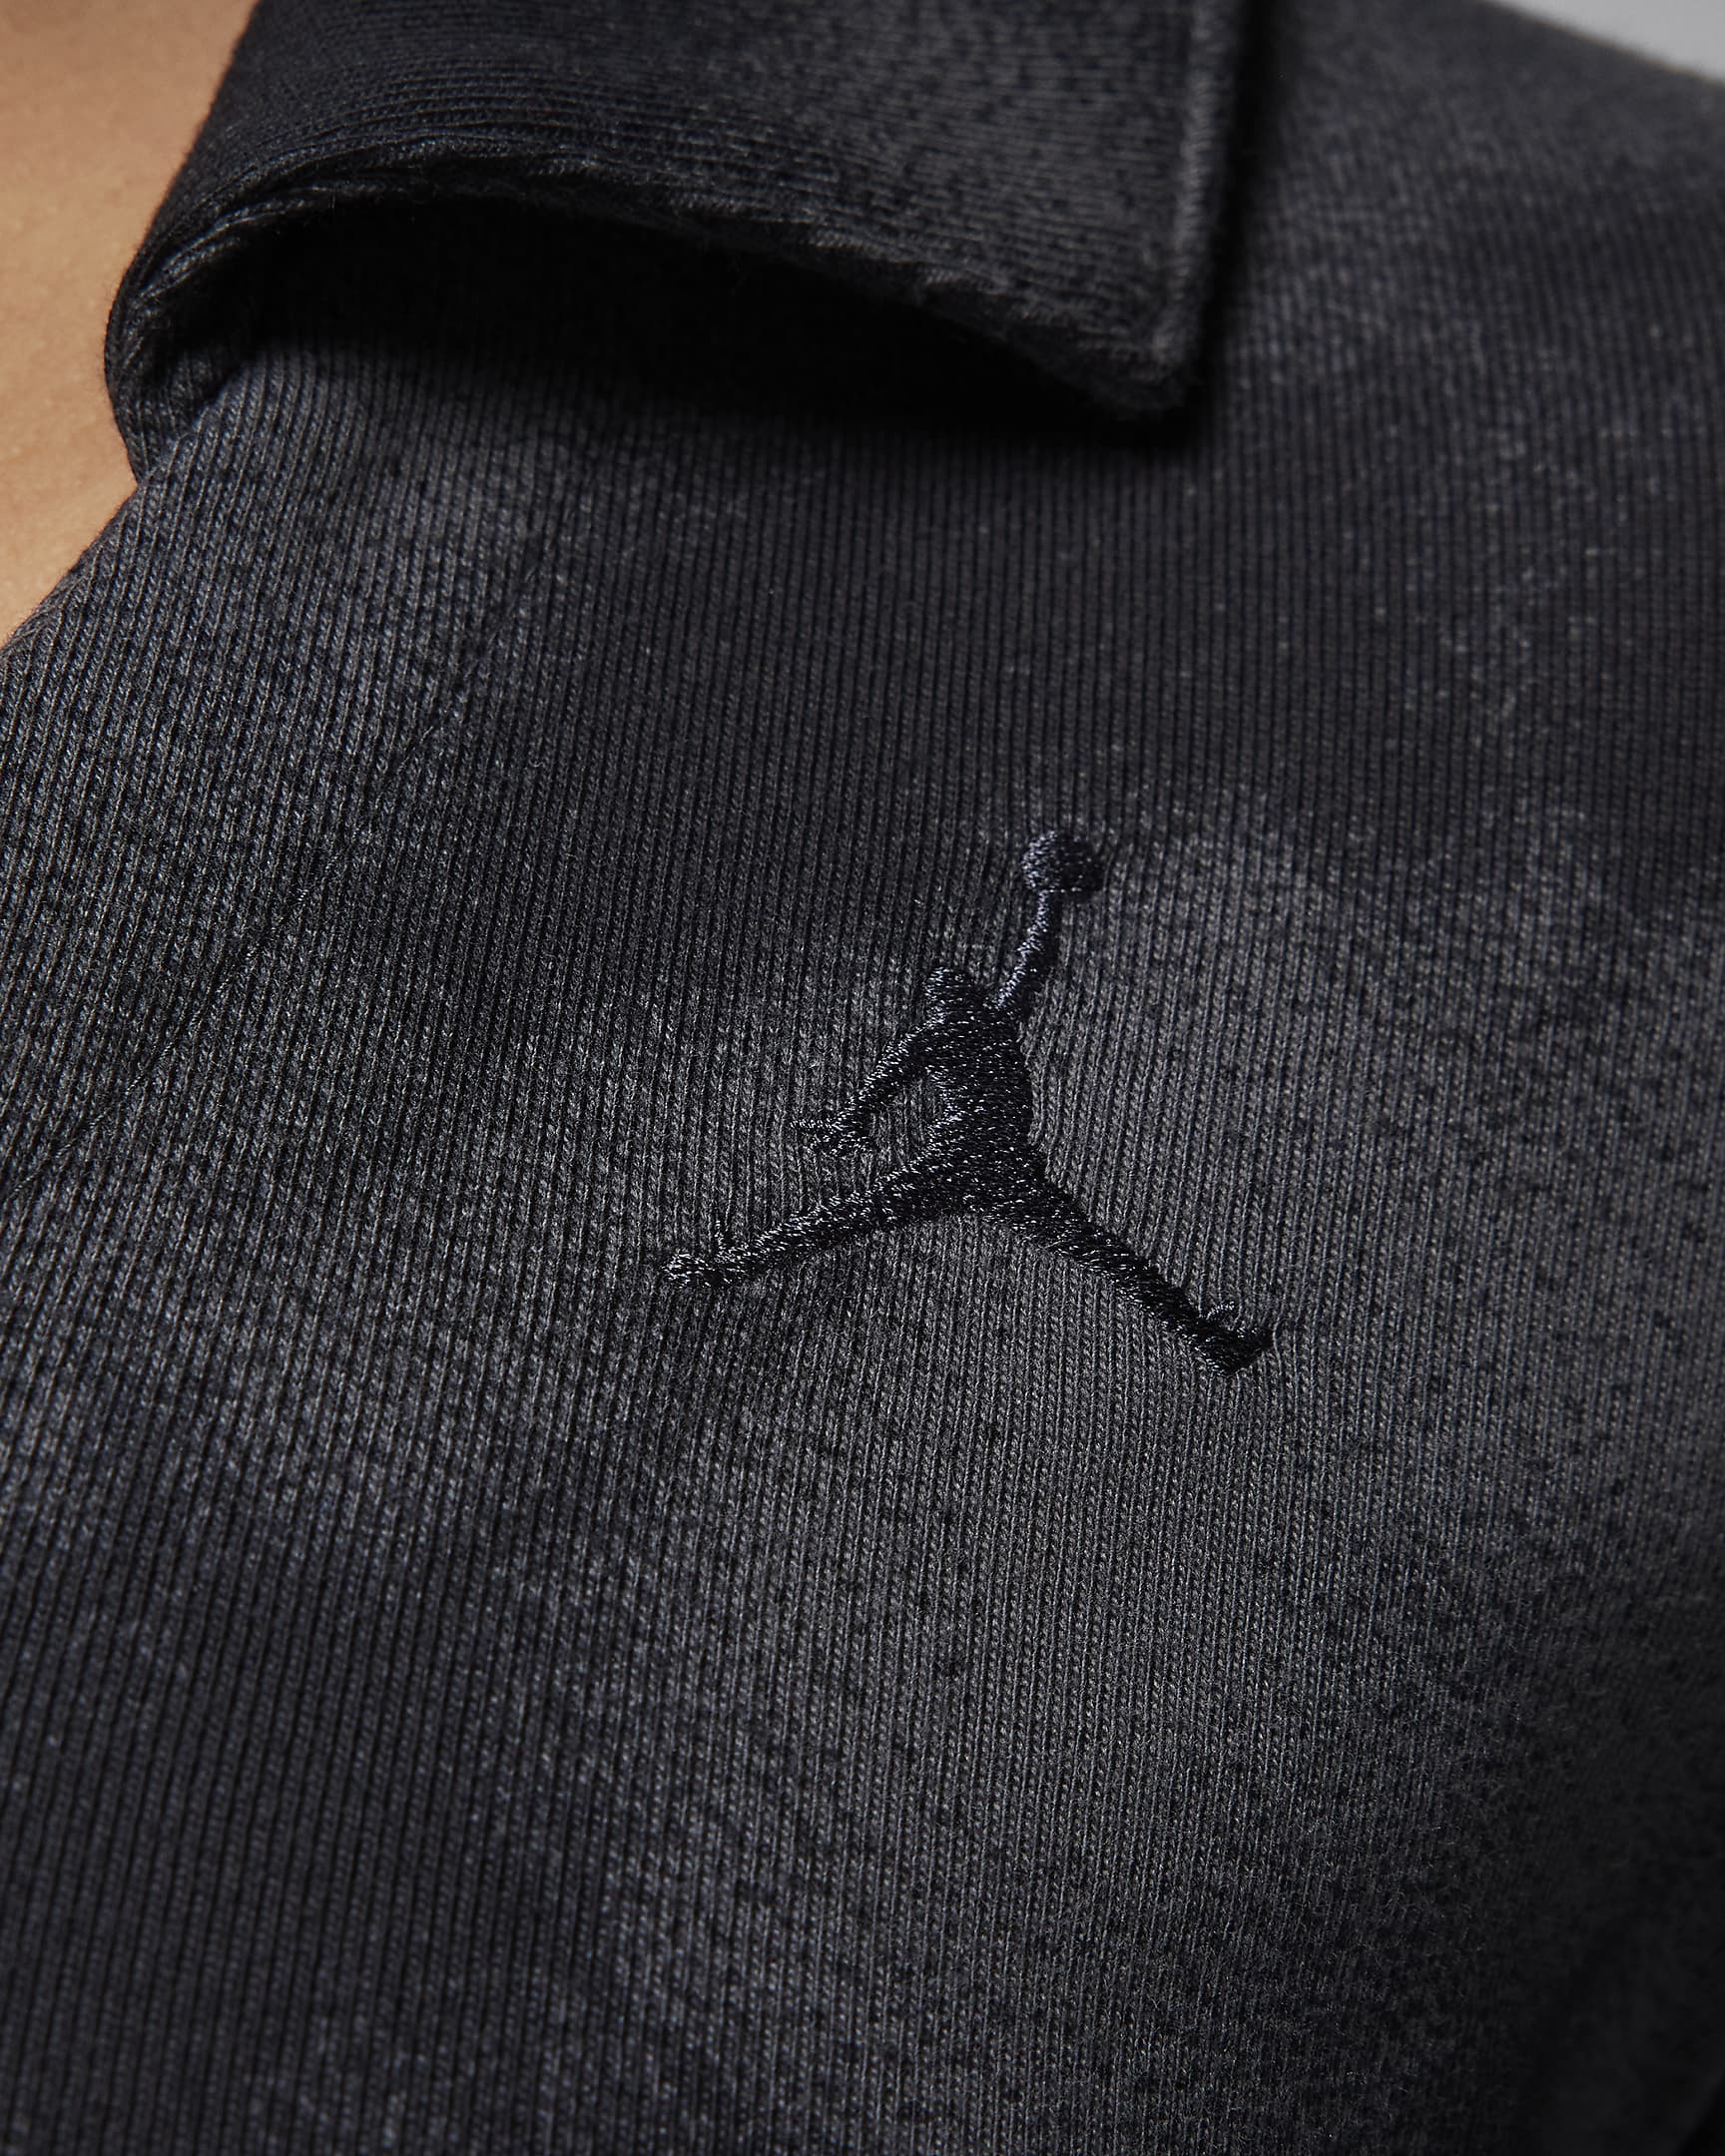 Jordan Women's Knit Short-Sleeve Top. Nike LU